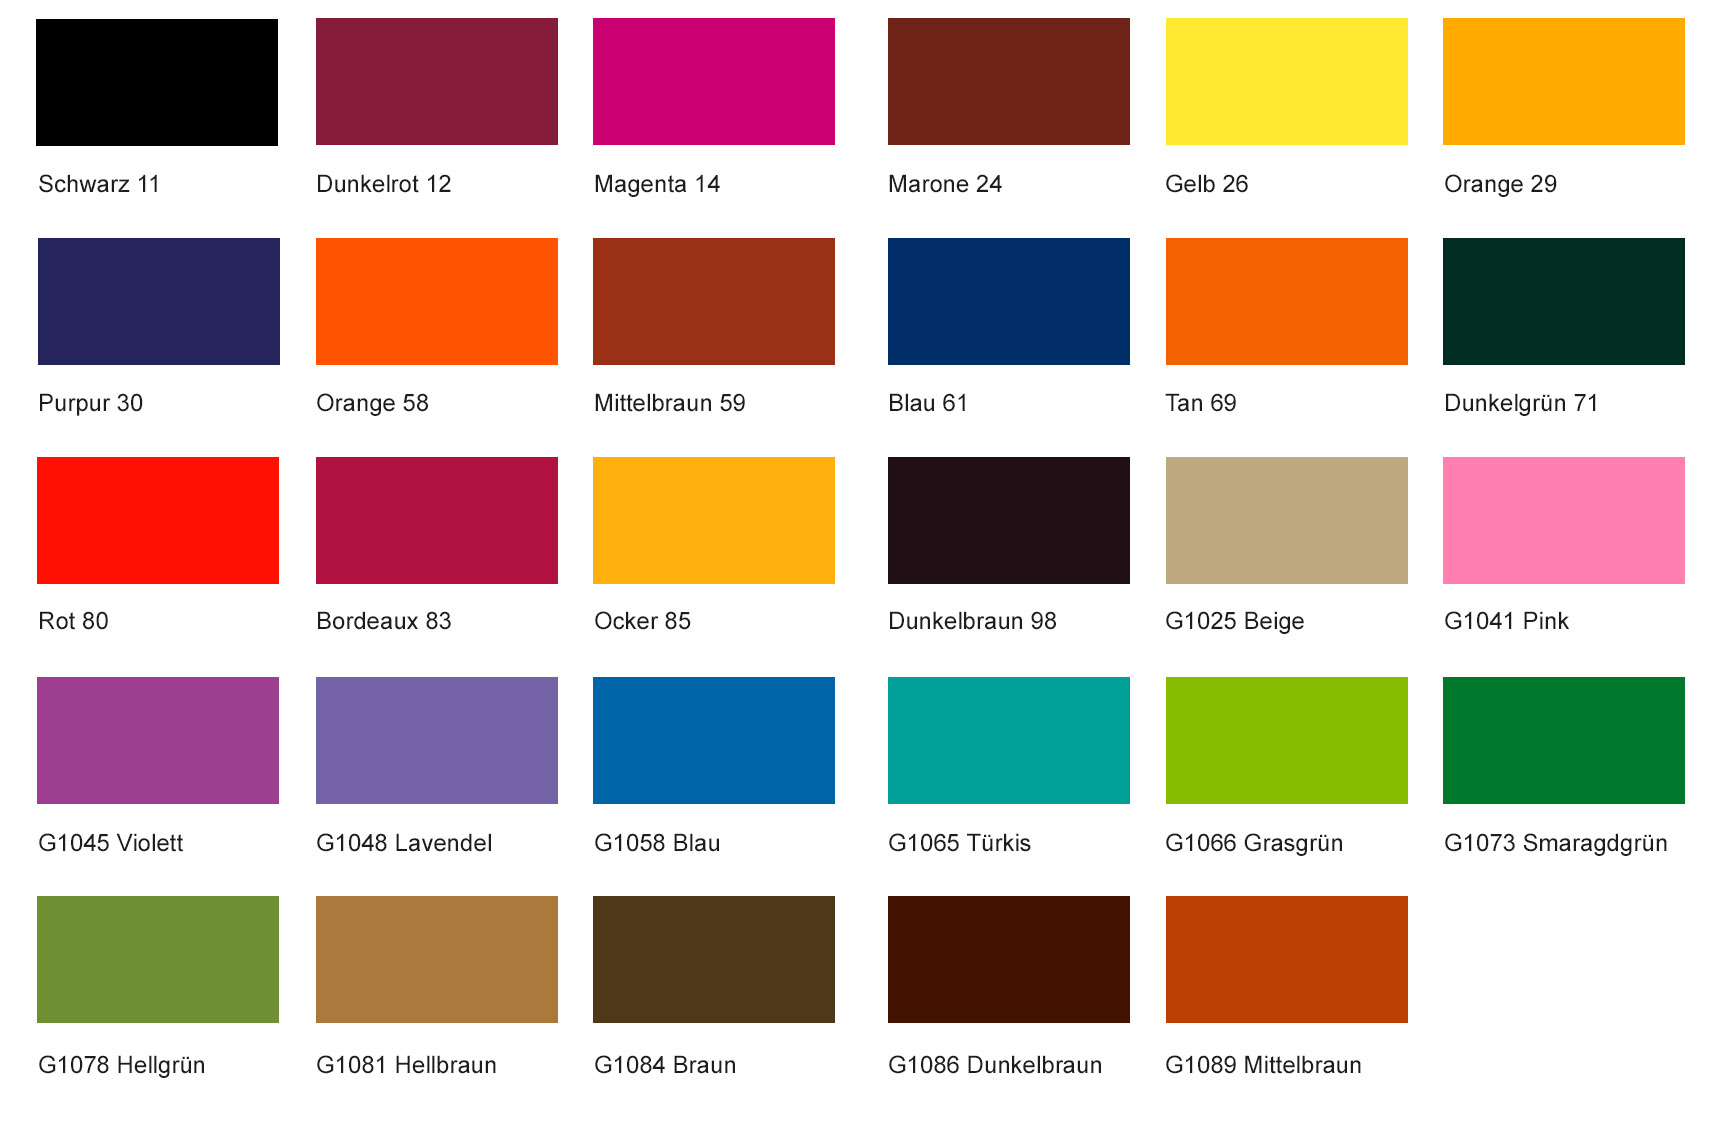 Fiebings Suede Dye Color Chart